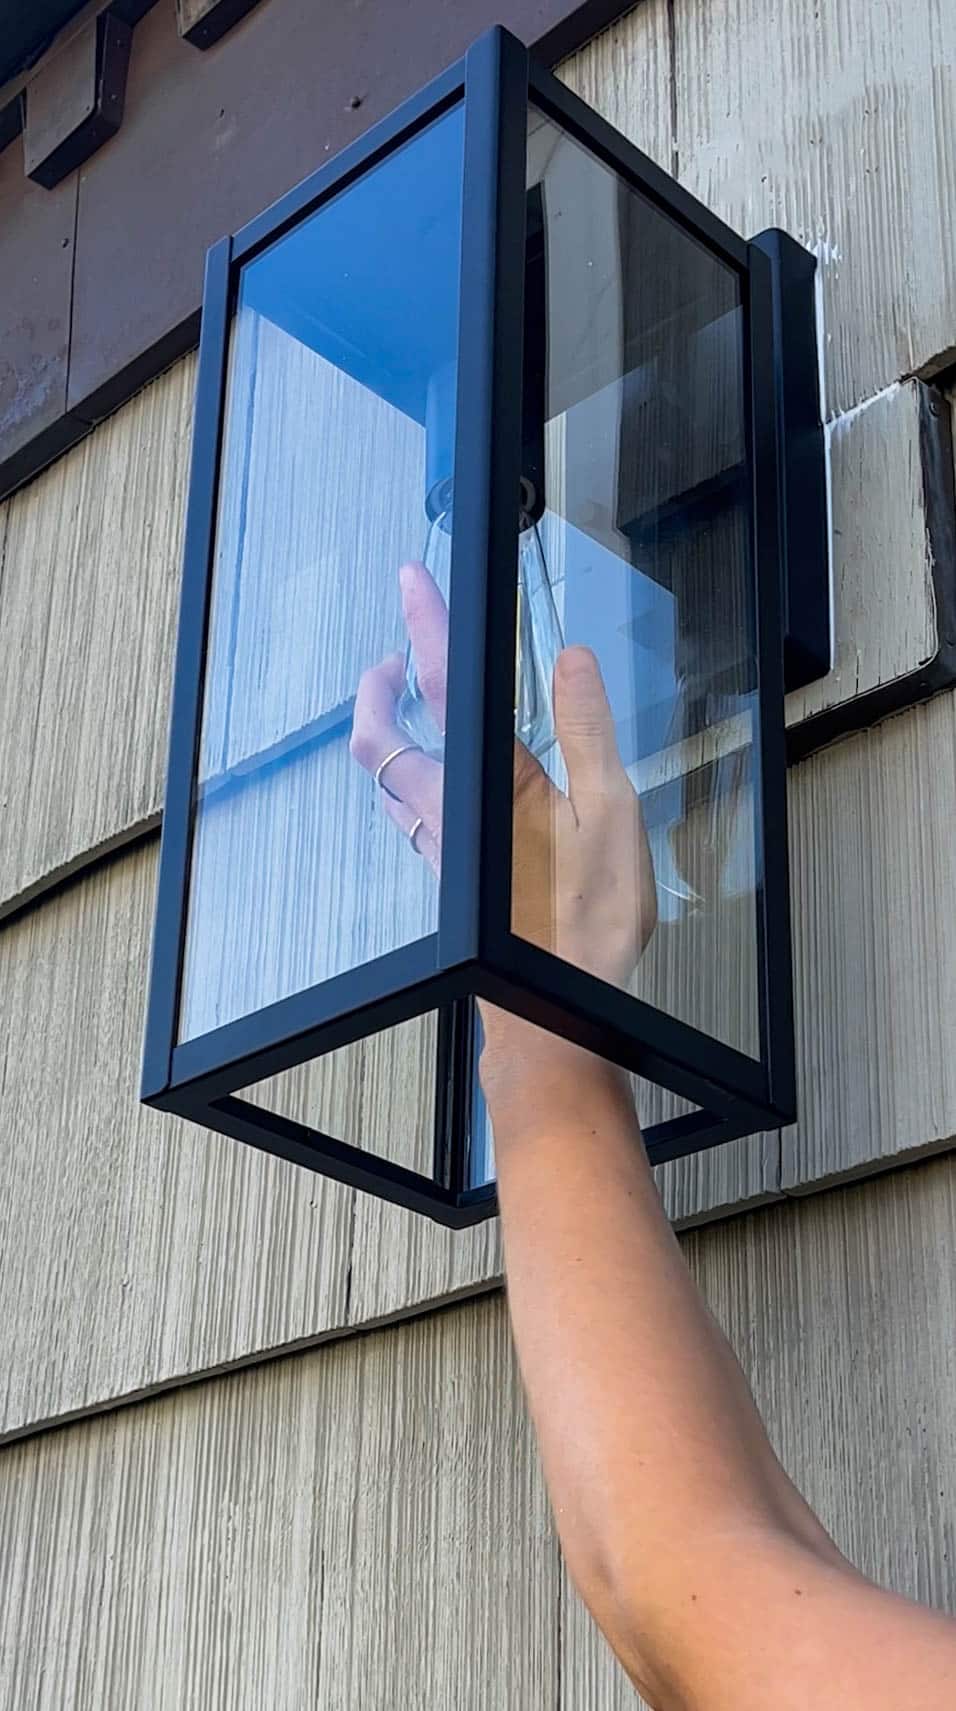 A person installing an outdoor light.